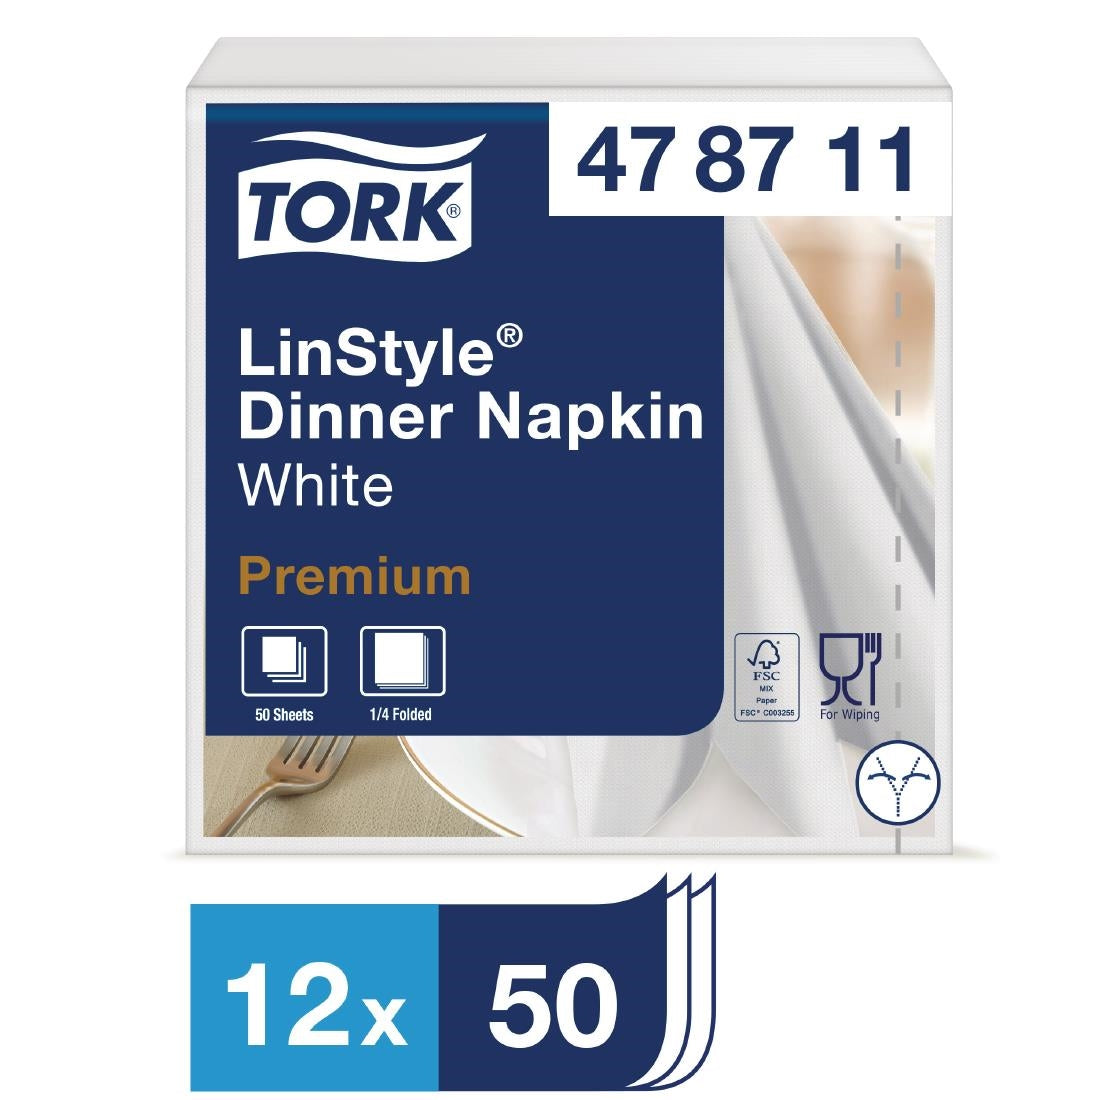 Tork Linstyle Dinner Napkin 400mm (Pack of 600)